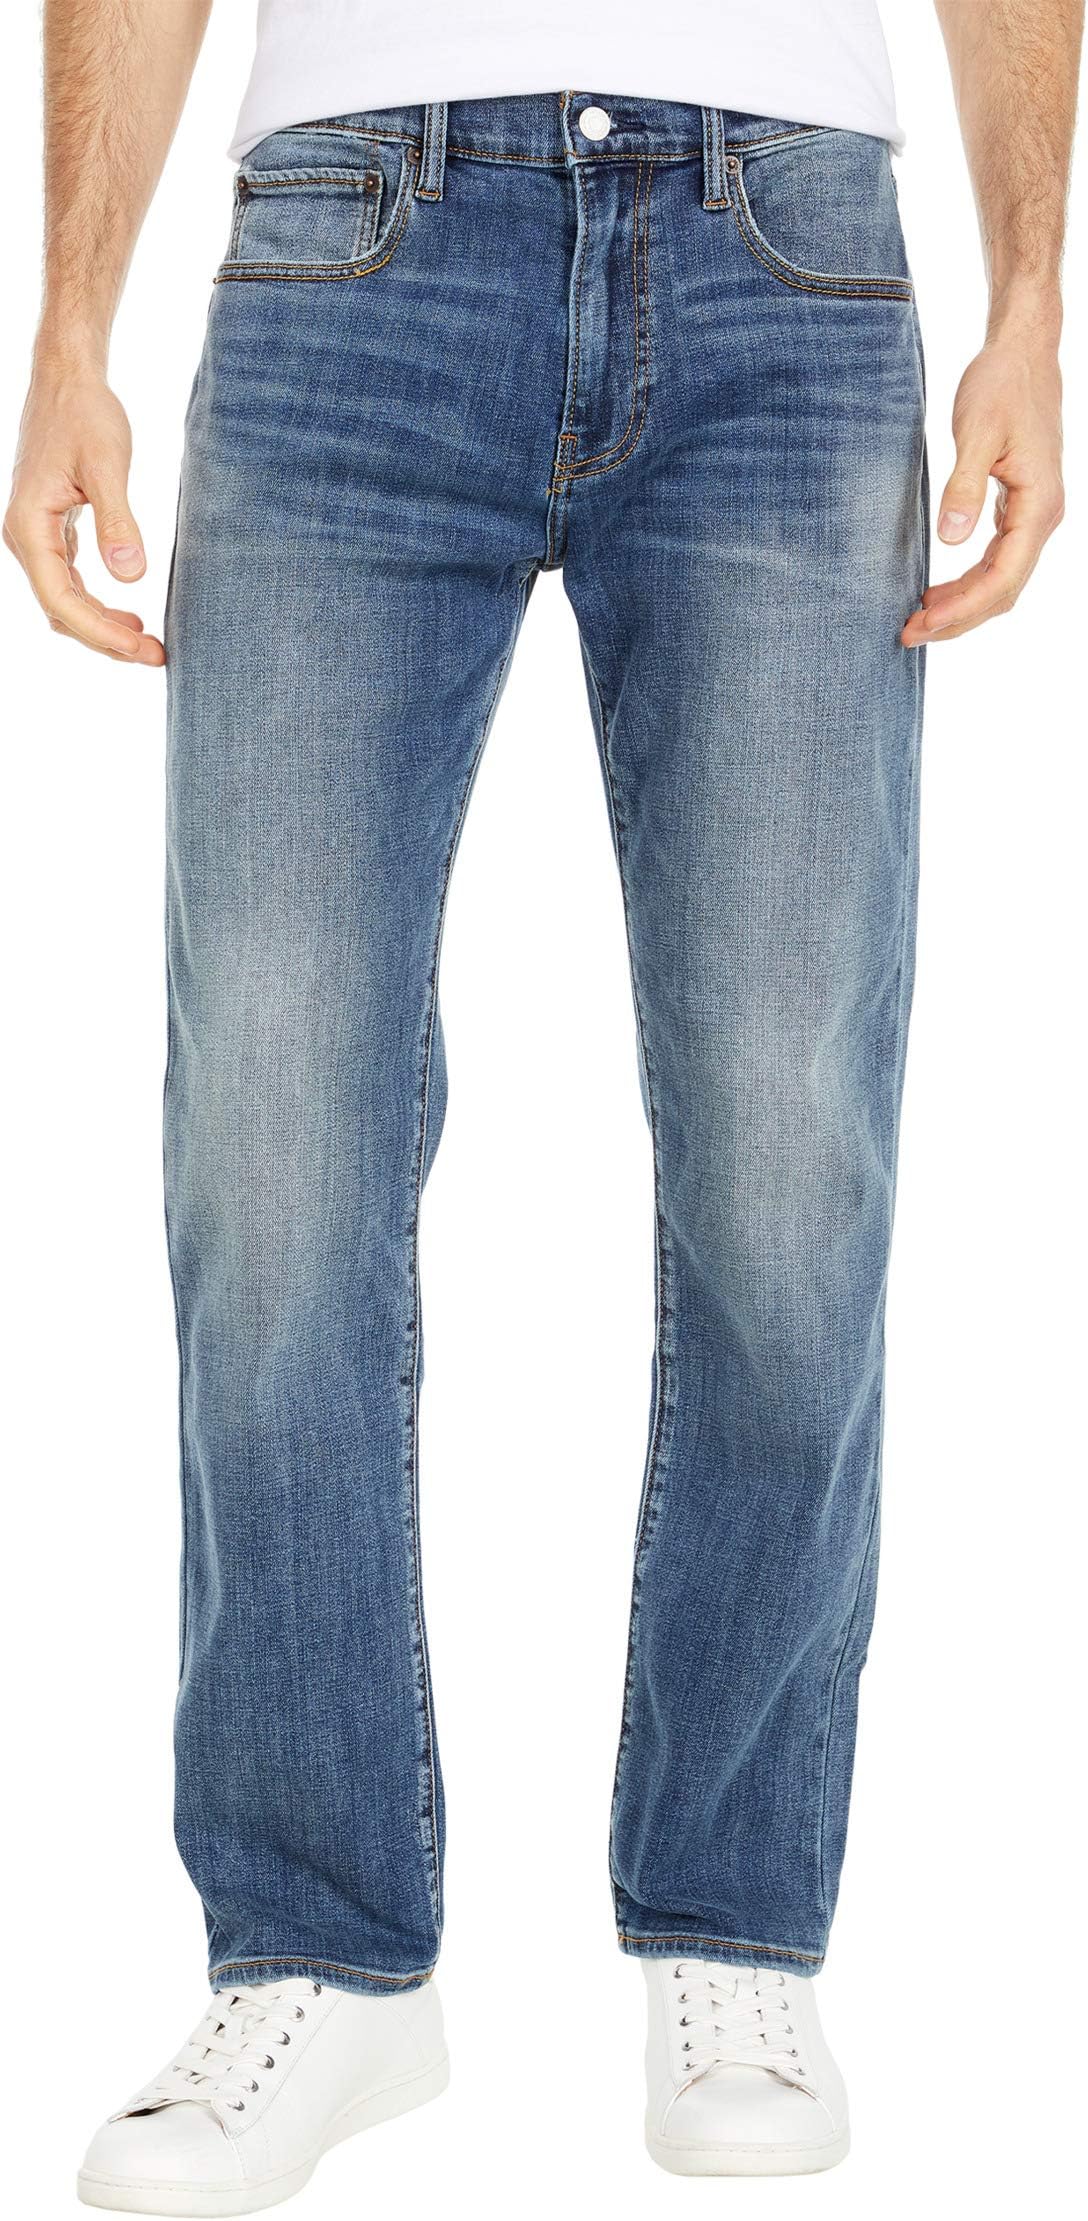 Джинсы 223 Straight Jeans in Harrison Lucky Brand, цвет Harrison umbro harrison